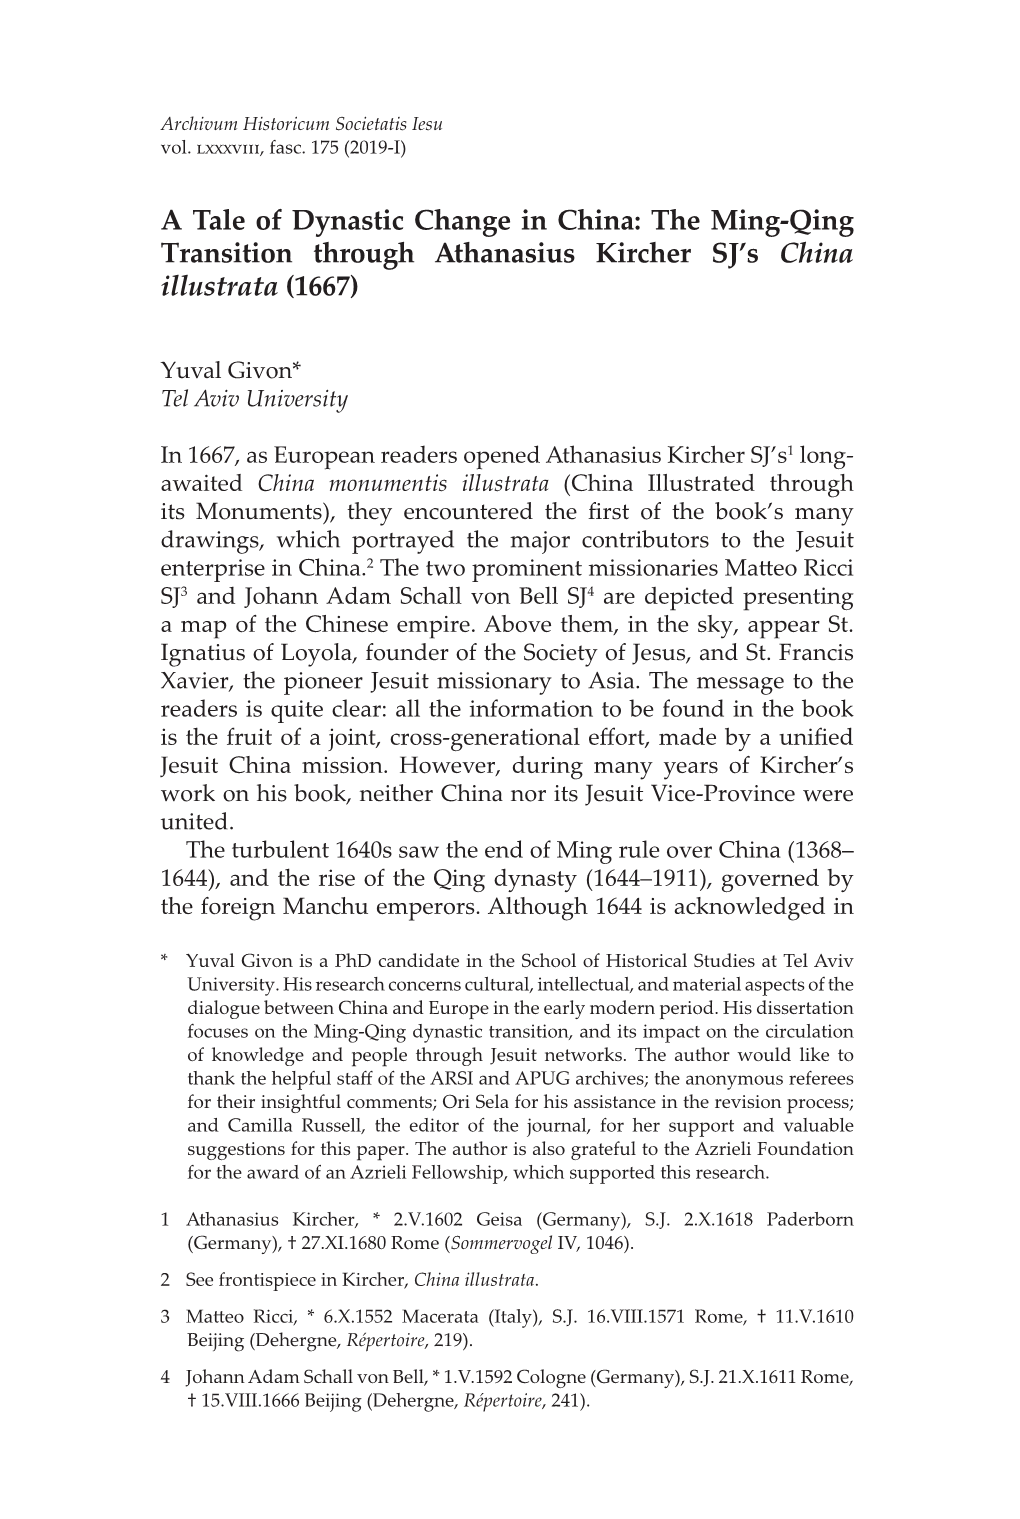 The Ming-Qing Transition Through Athanasius Kircher SJ's China